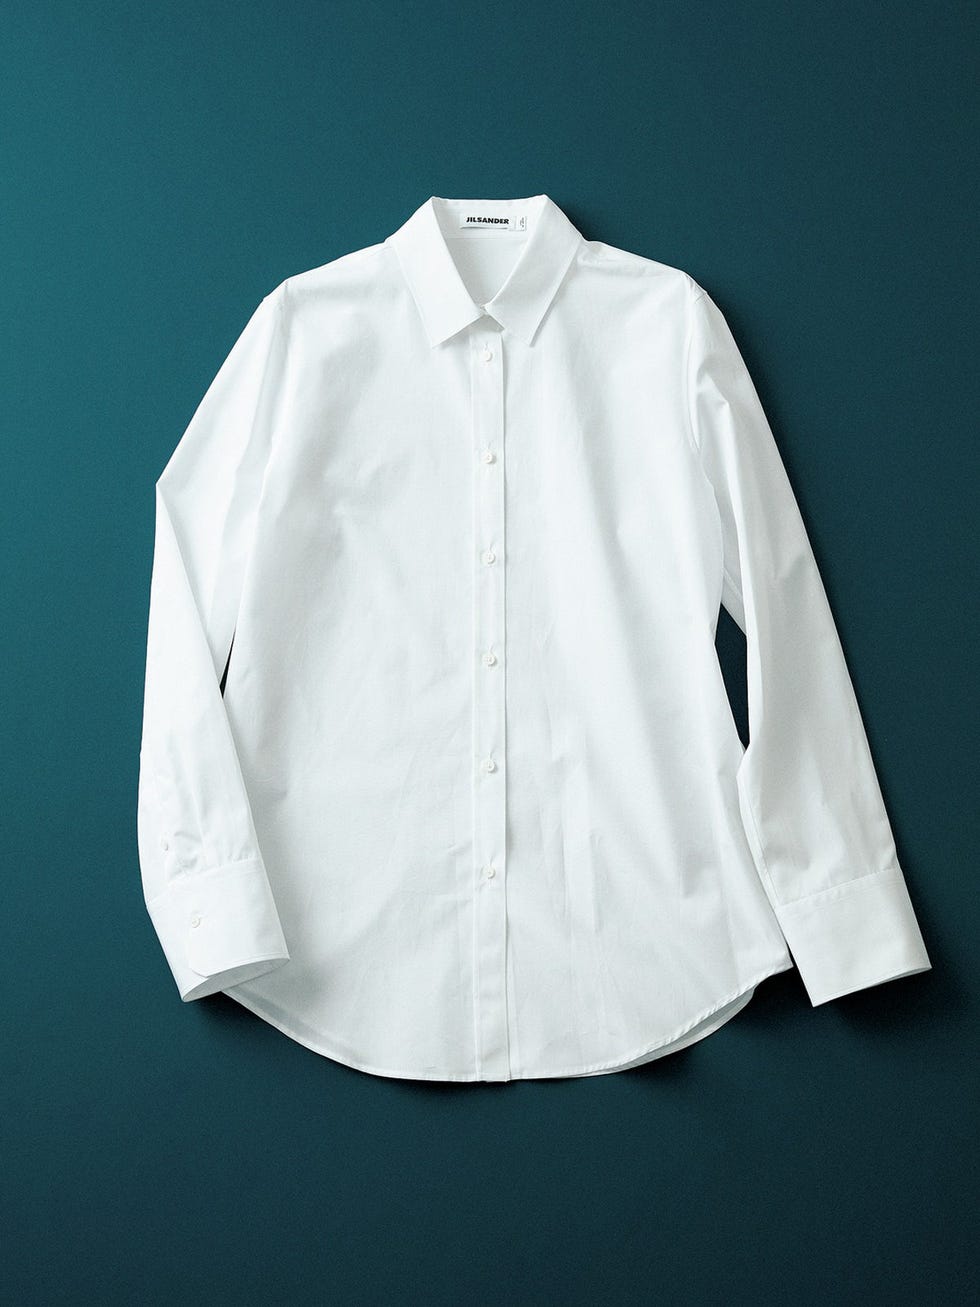 Collar, Sleeve, Dress shirt, White, Fashion, Clothes hanger, Button, Fashion design, 